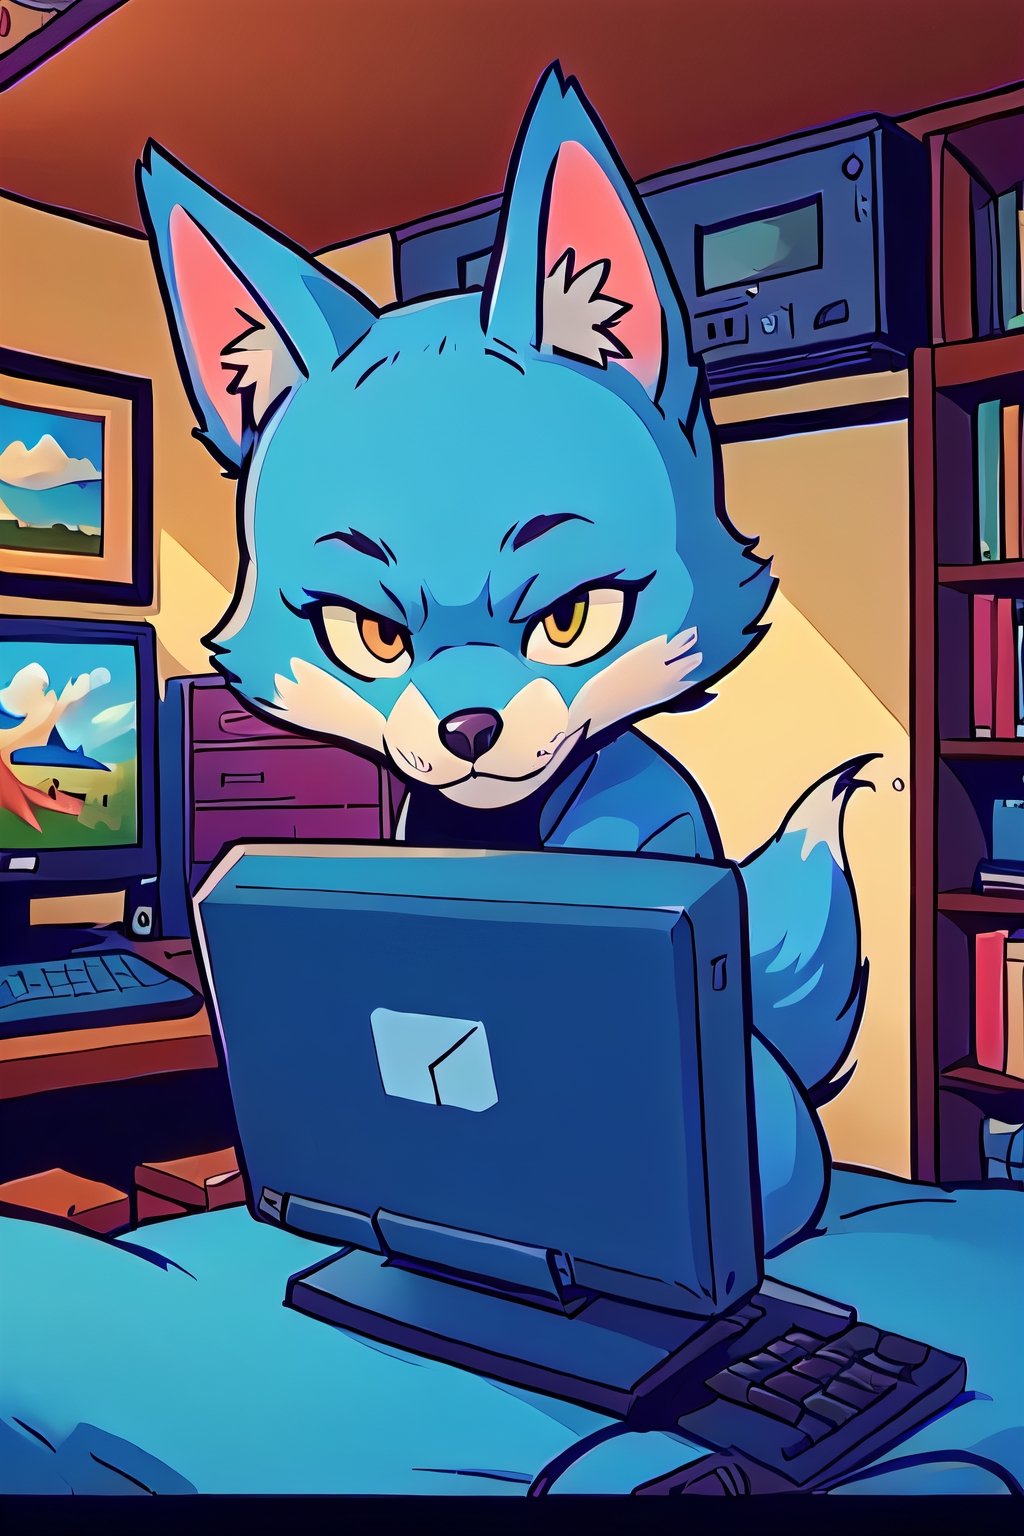 (masterpiece:1.5), (best quality:1.5), cute little blue fox, animal, computer room, Comic Art Style